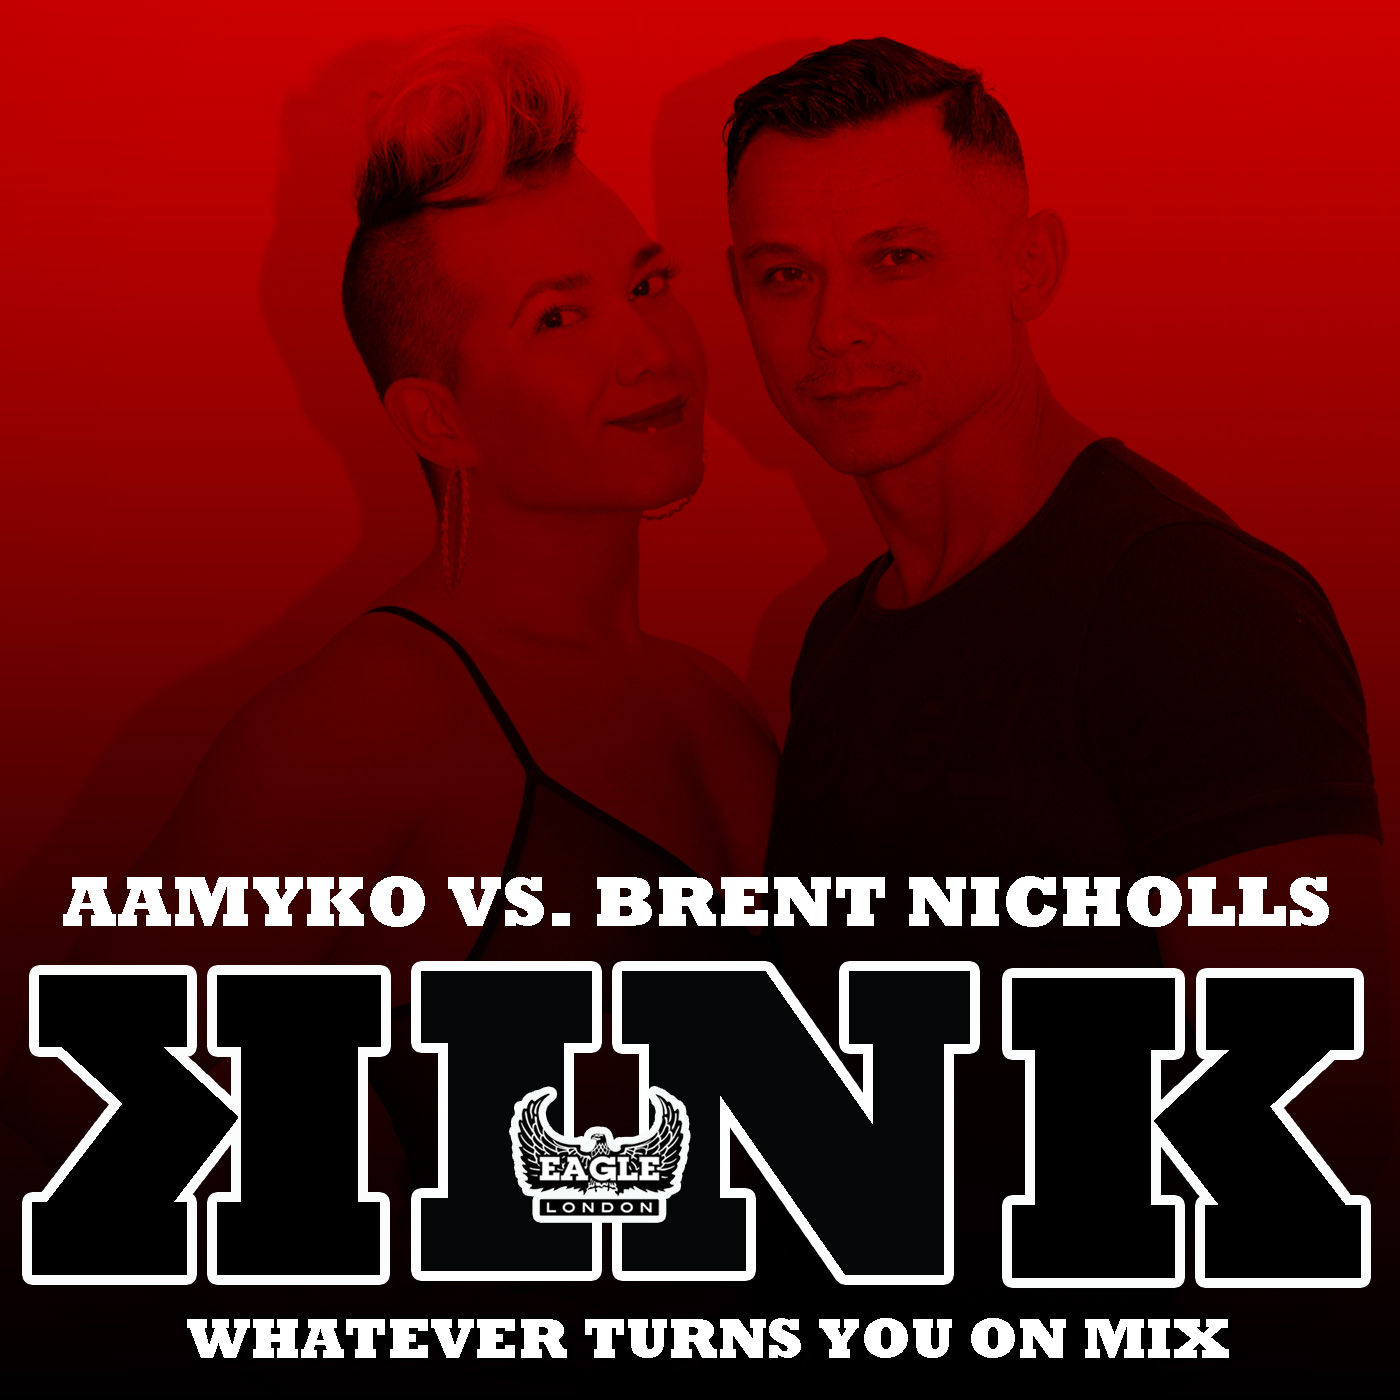 PODCAST: KINK- AAMYKO VS BRENT NICHOLLS